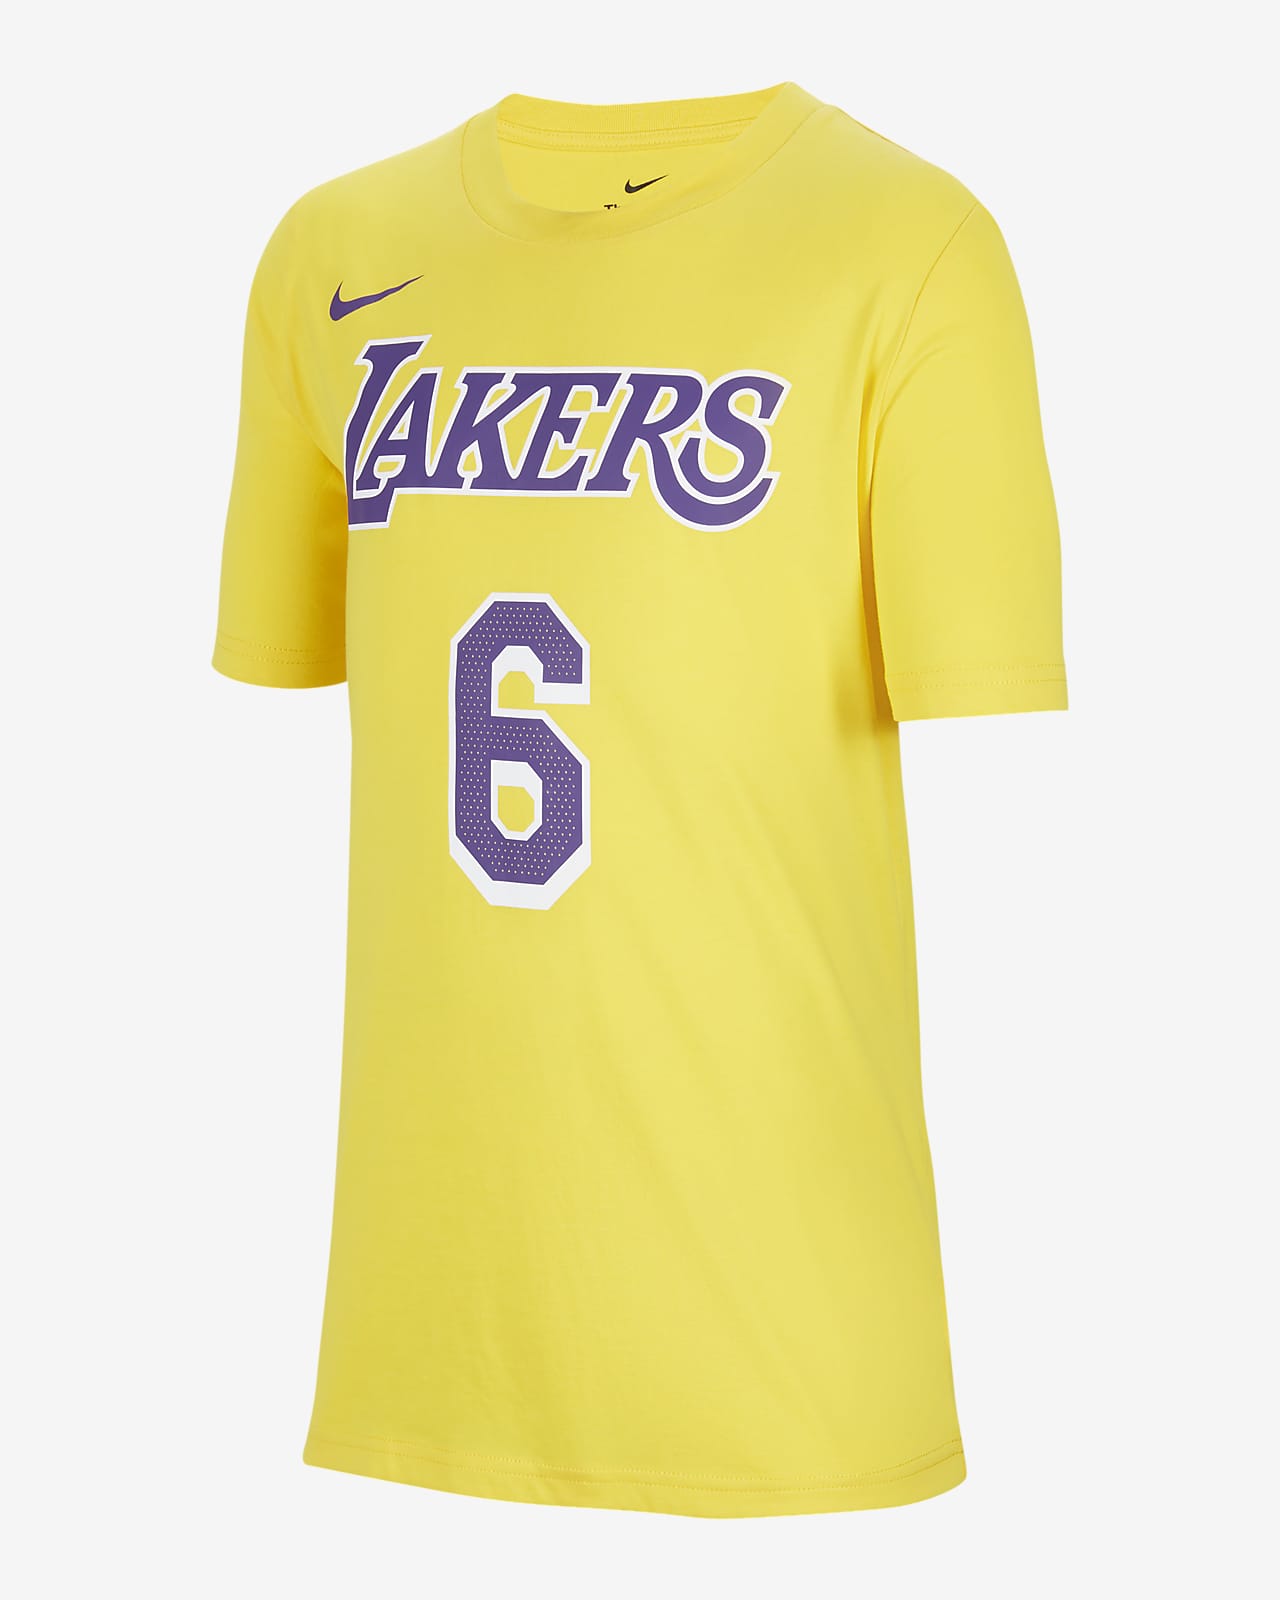 T-Shirt Nike NBA Λος Άντζελες Λέικερς για μεγάλα παιδιά